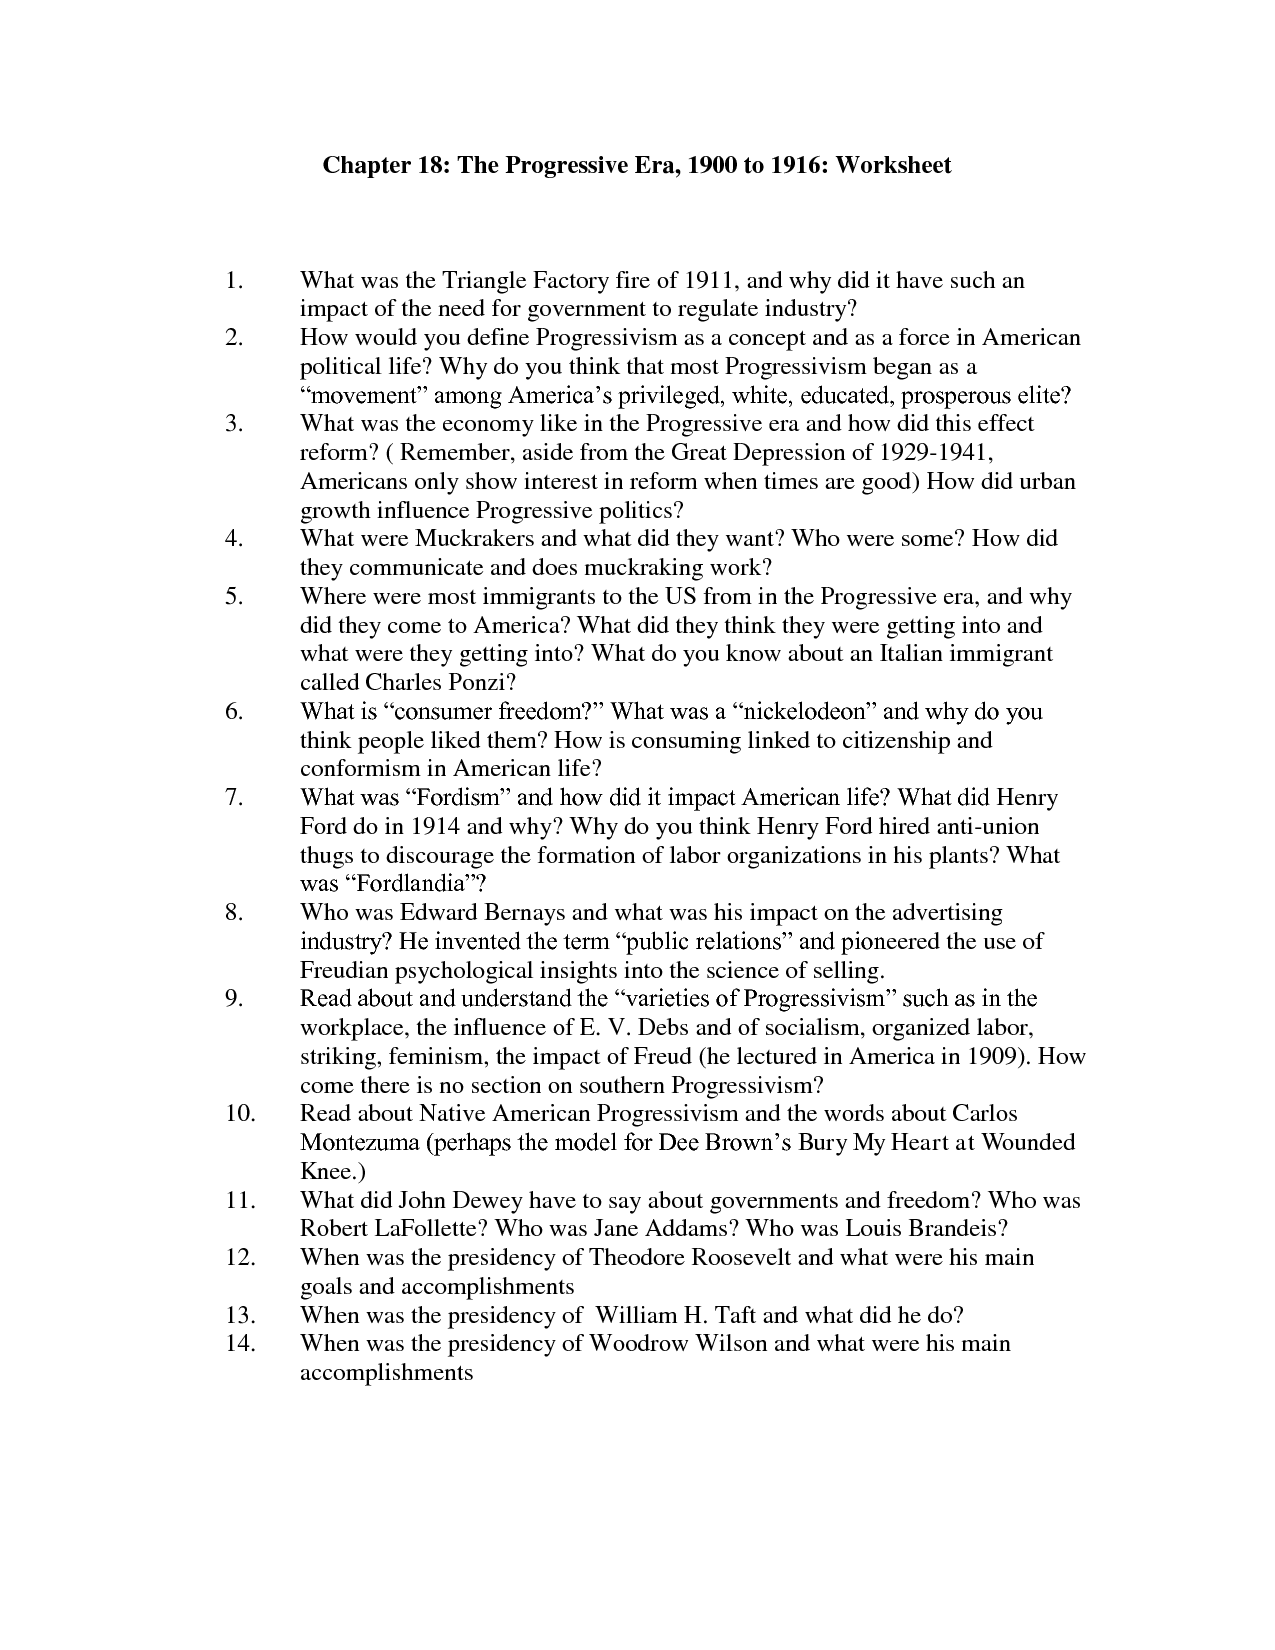 monroe-doctrine-worksheet-pdf-answer-key-bloxinspire